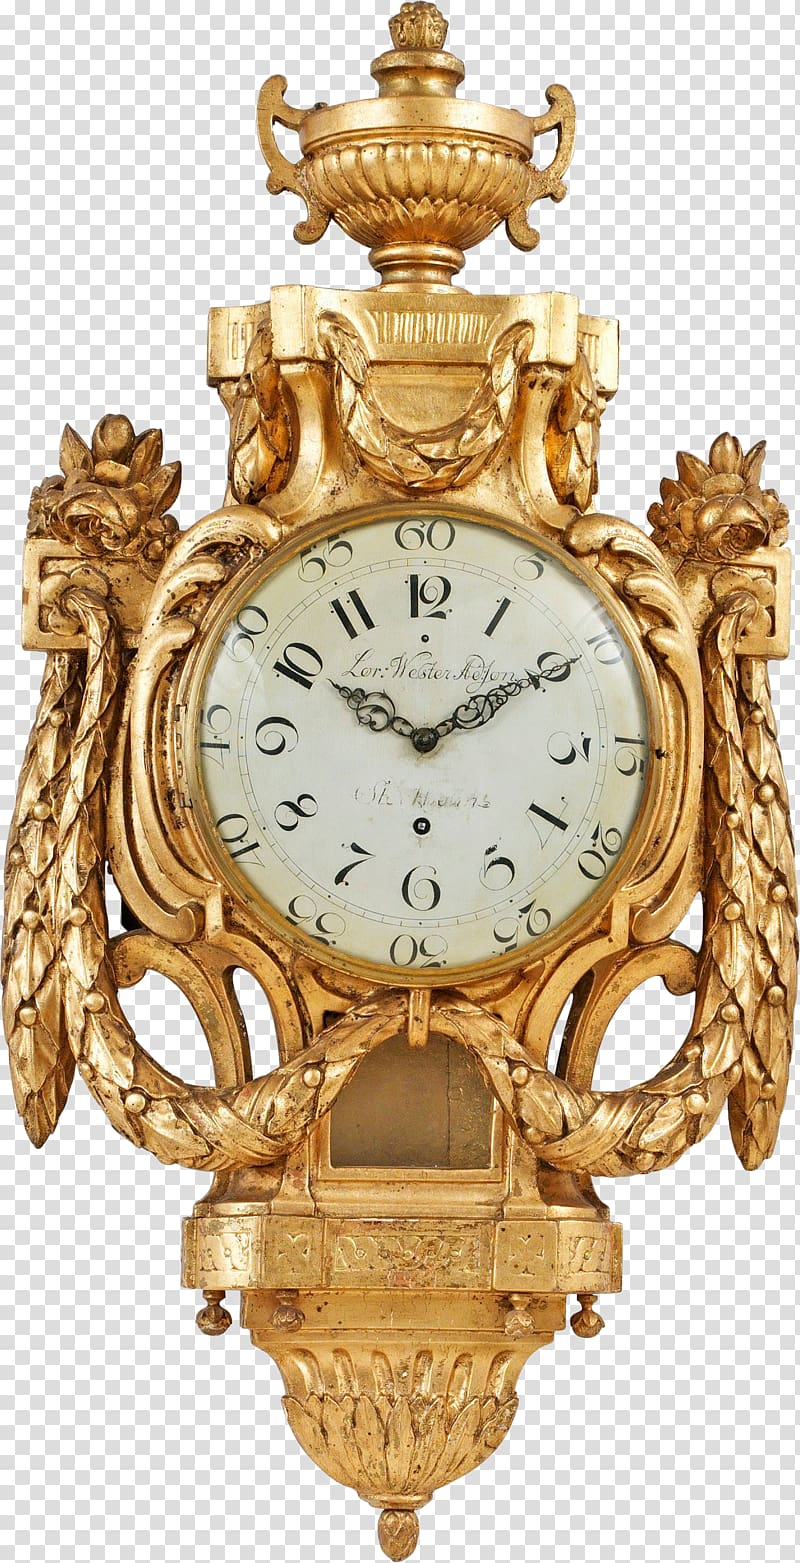 Pendulum clock Alarm Clocks Watch, Gold watches transparent background PNG clipart